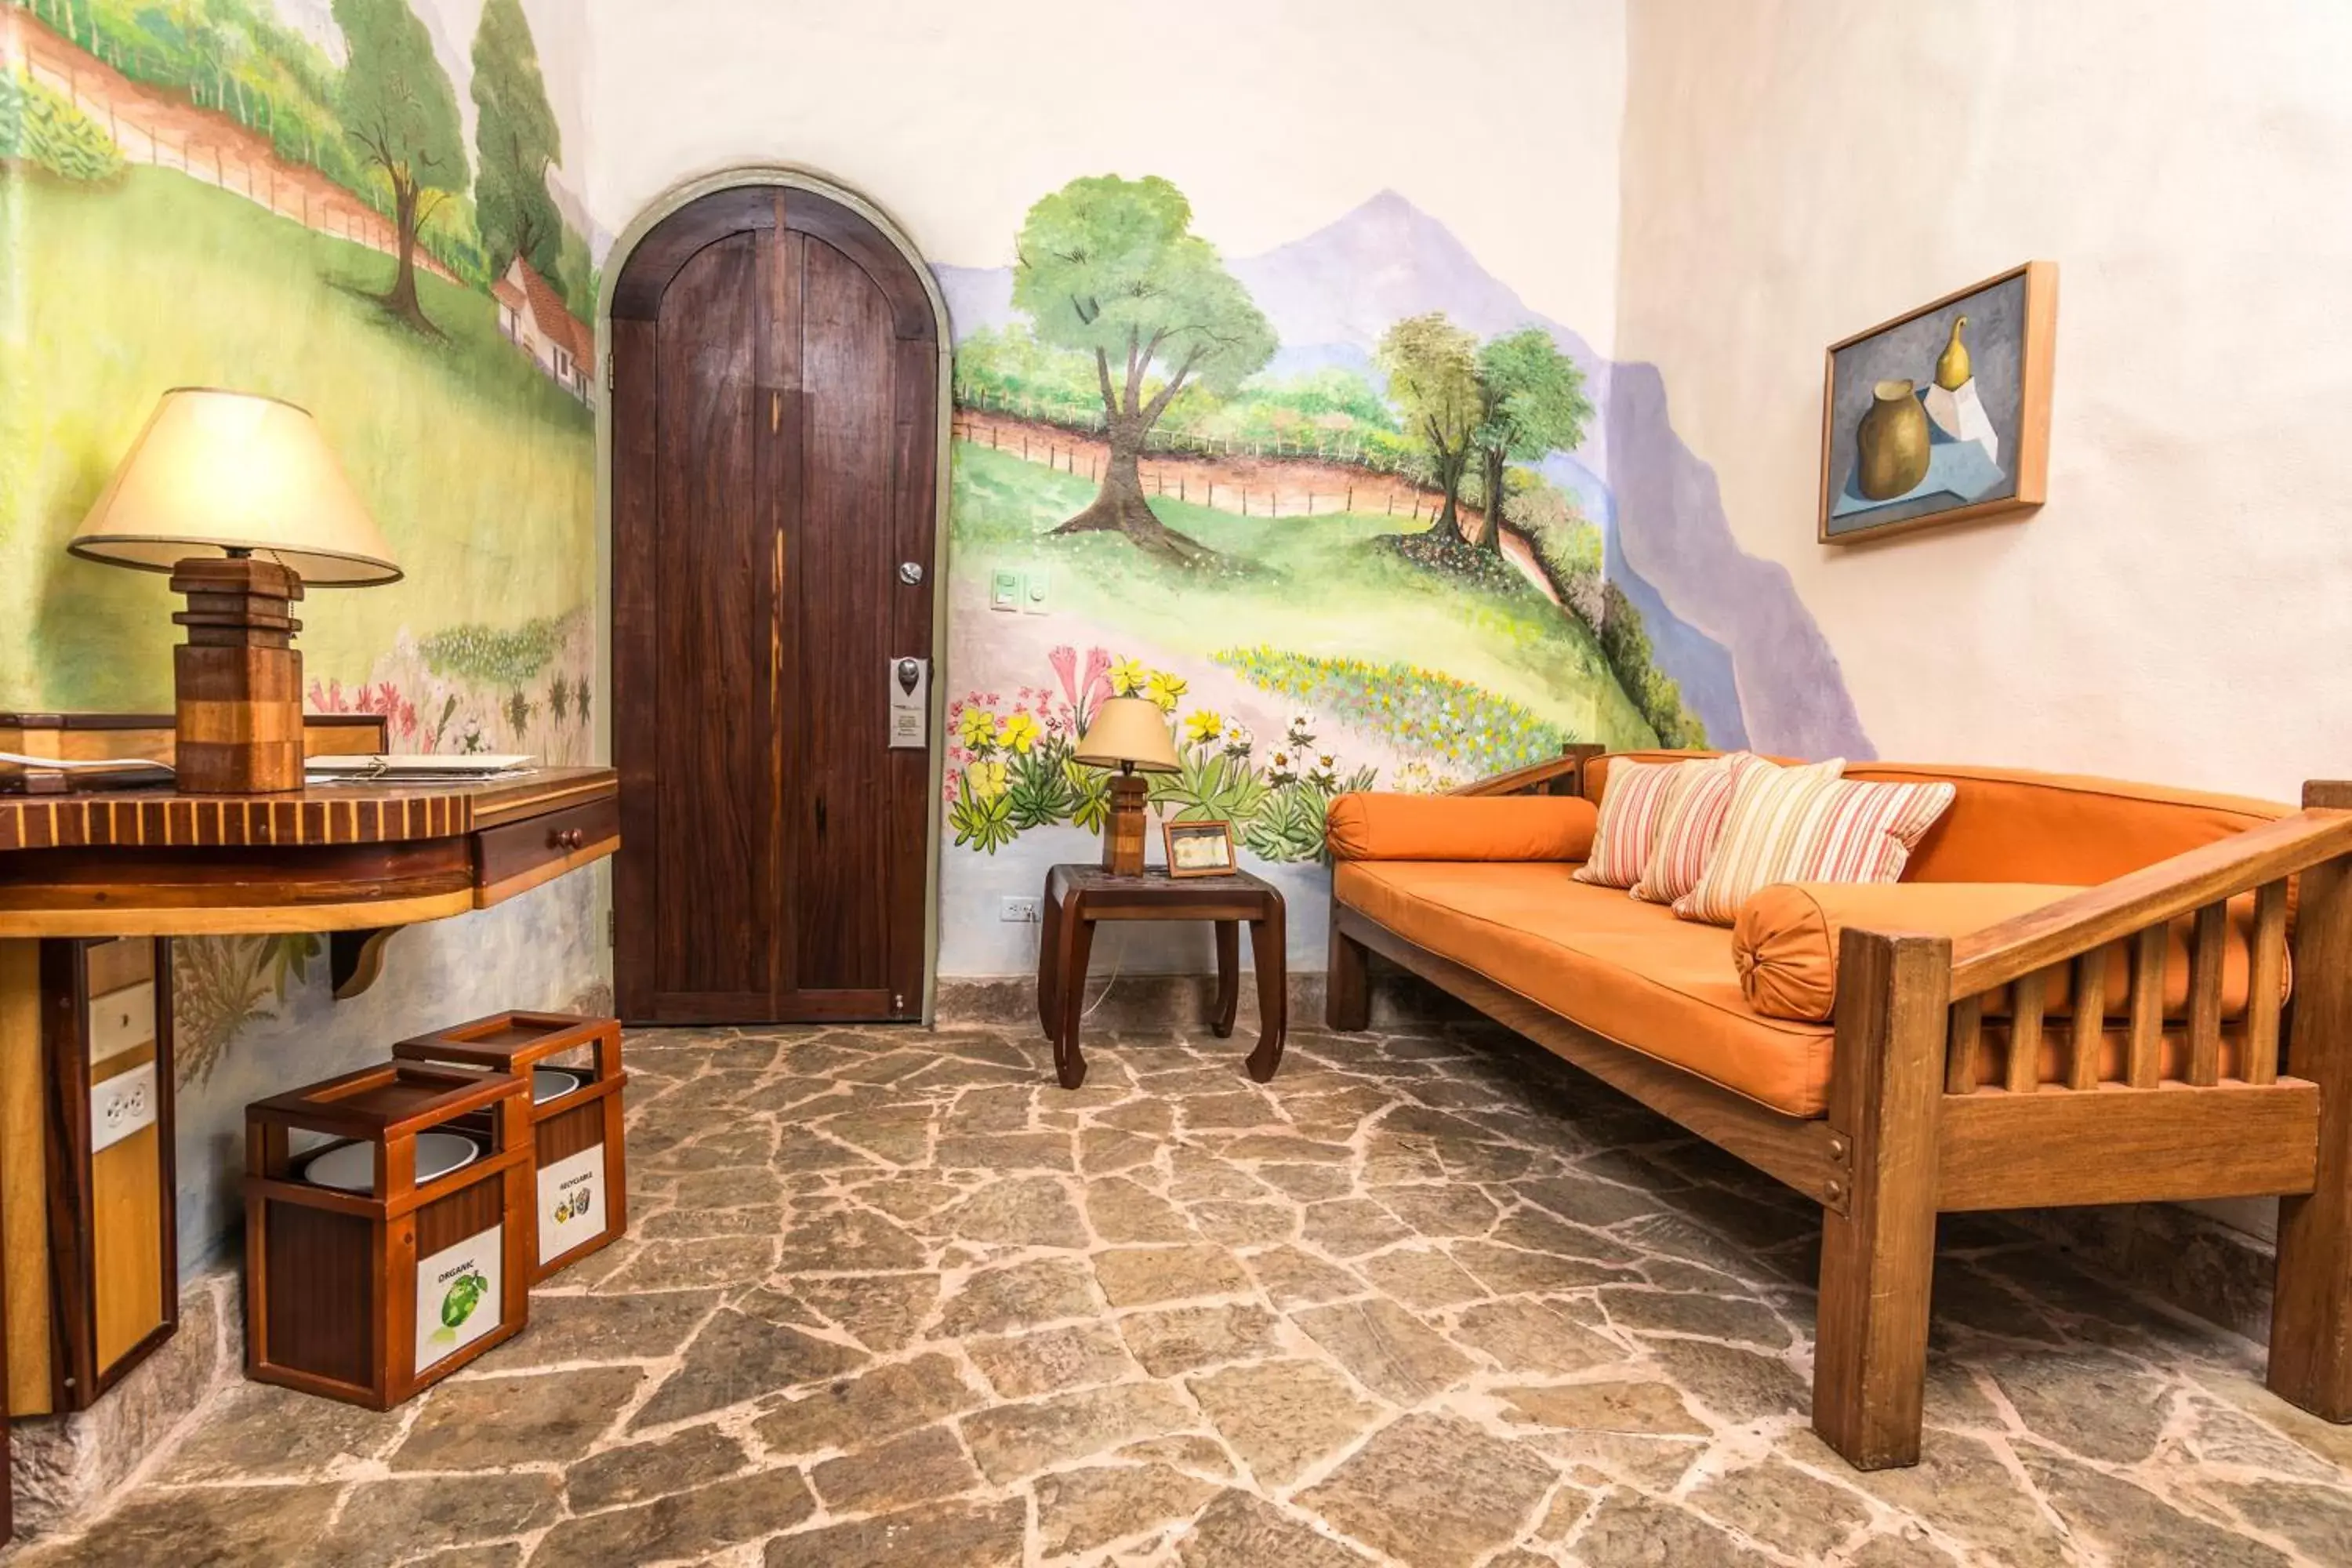 Decorative detail, Seating Area in Finca Rosa Blanca Coffee Farm and Inn